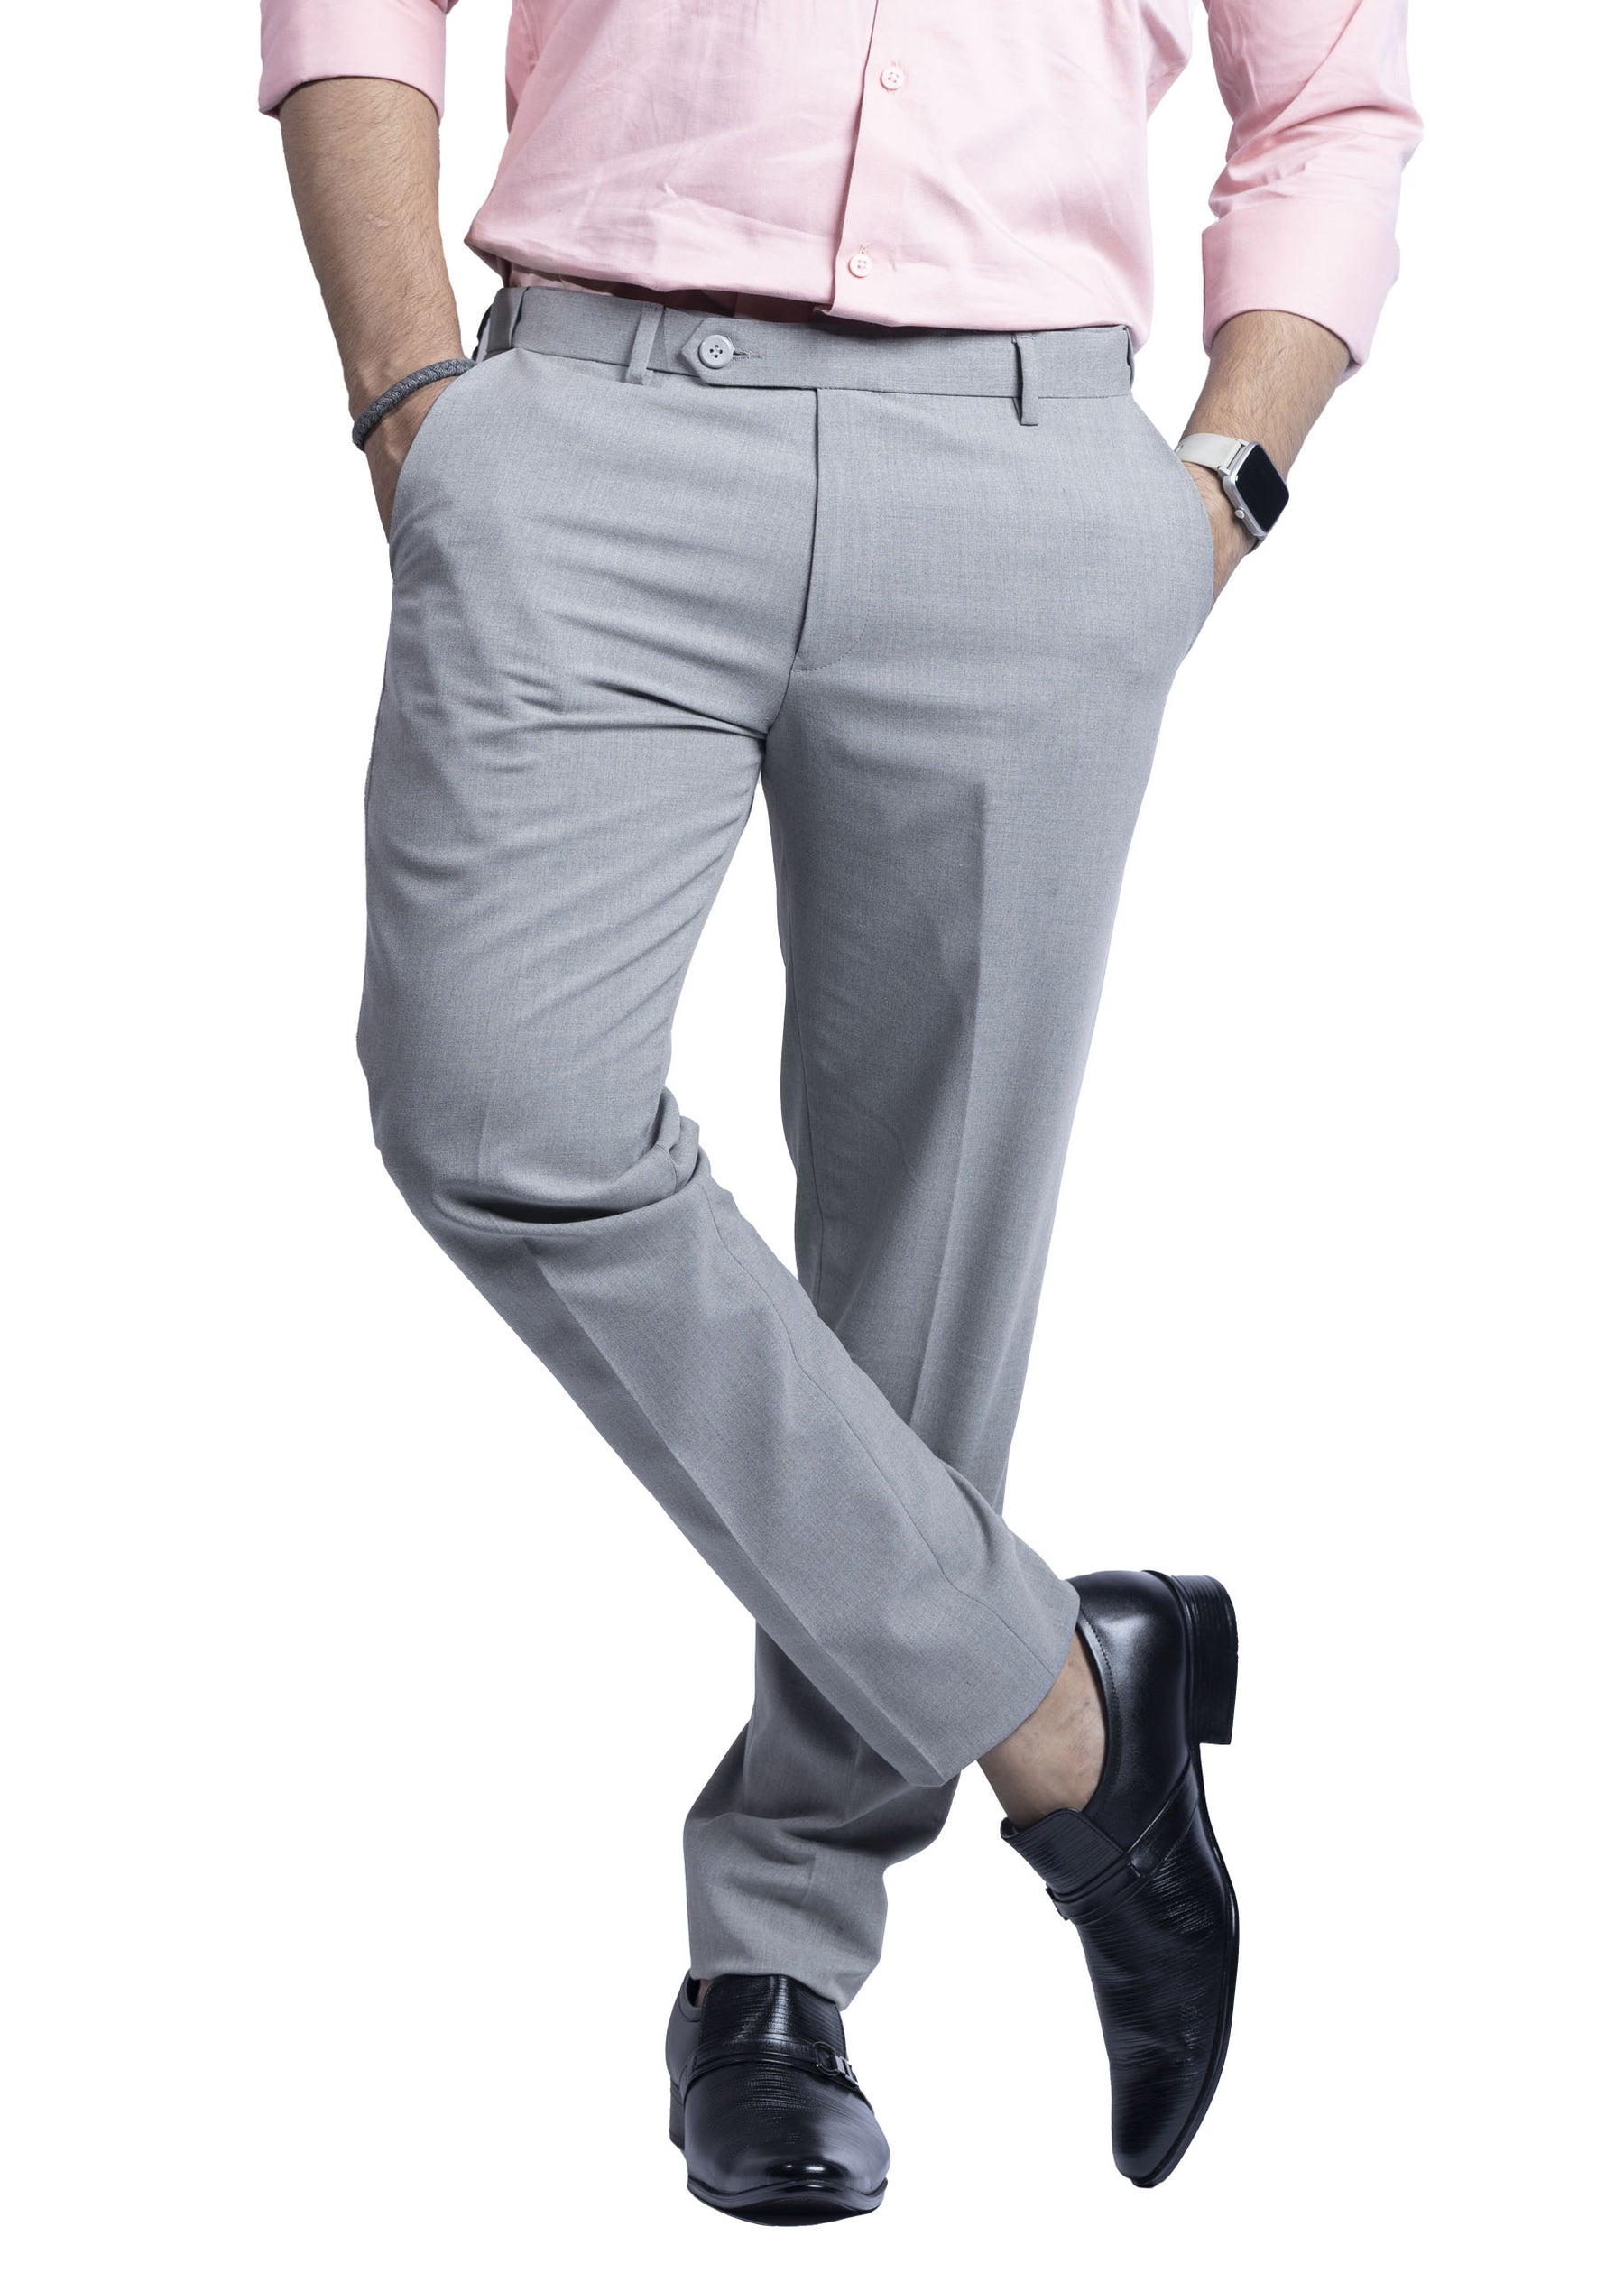 Flexiwaist Pant For Men